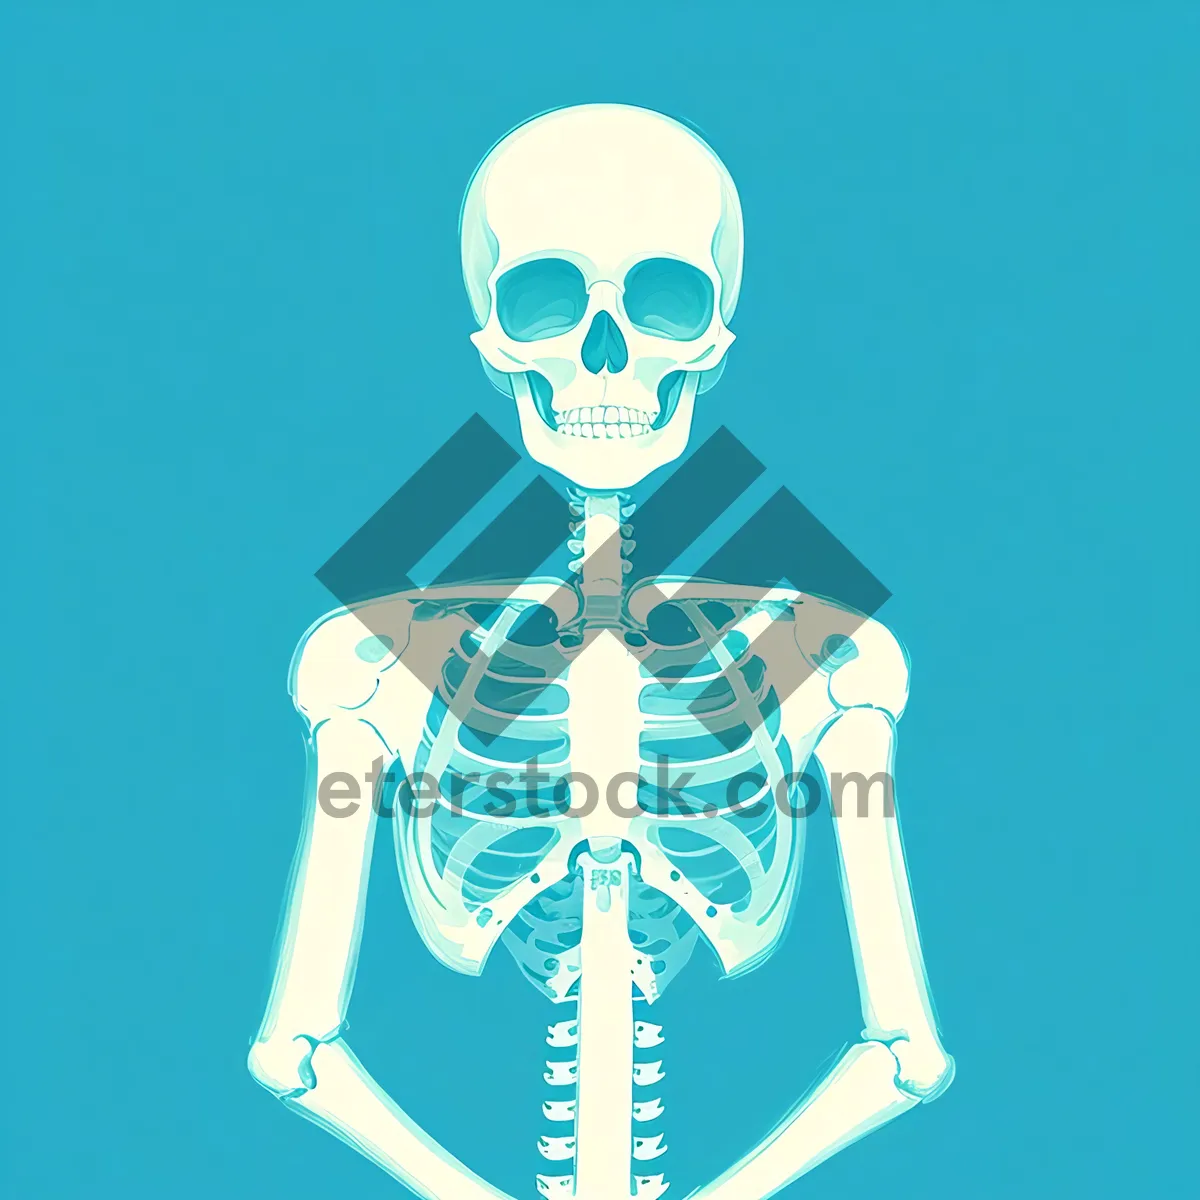 Picture of Anatomical Skeleton Illustration with 3D Rendered Skull